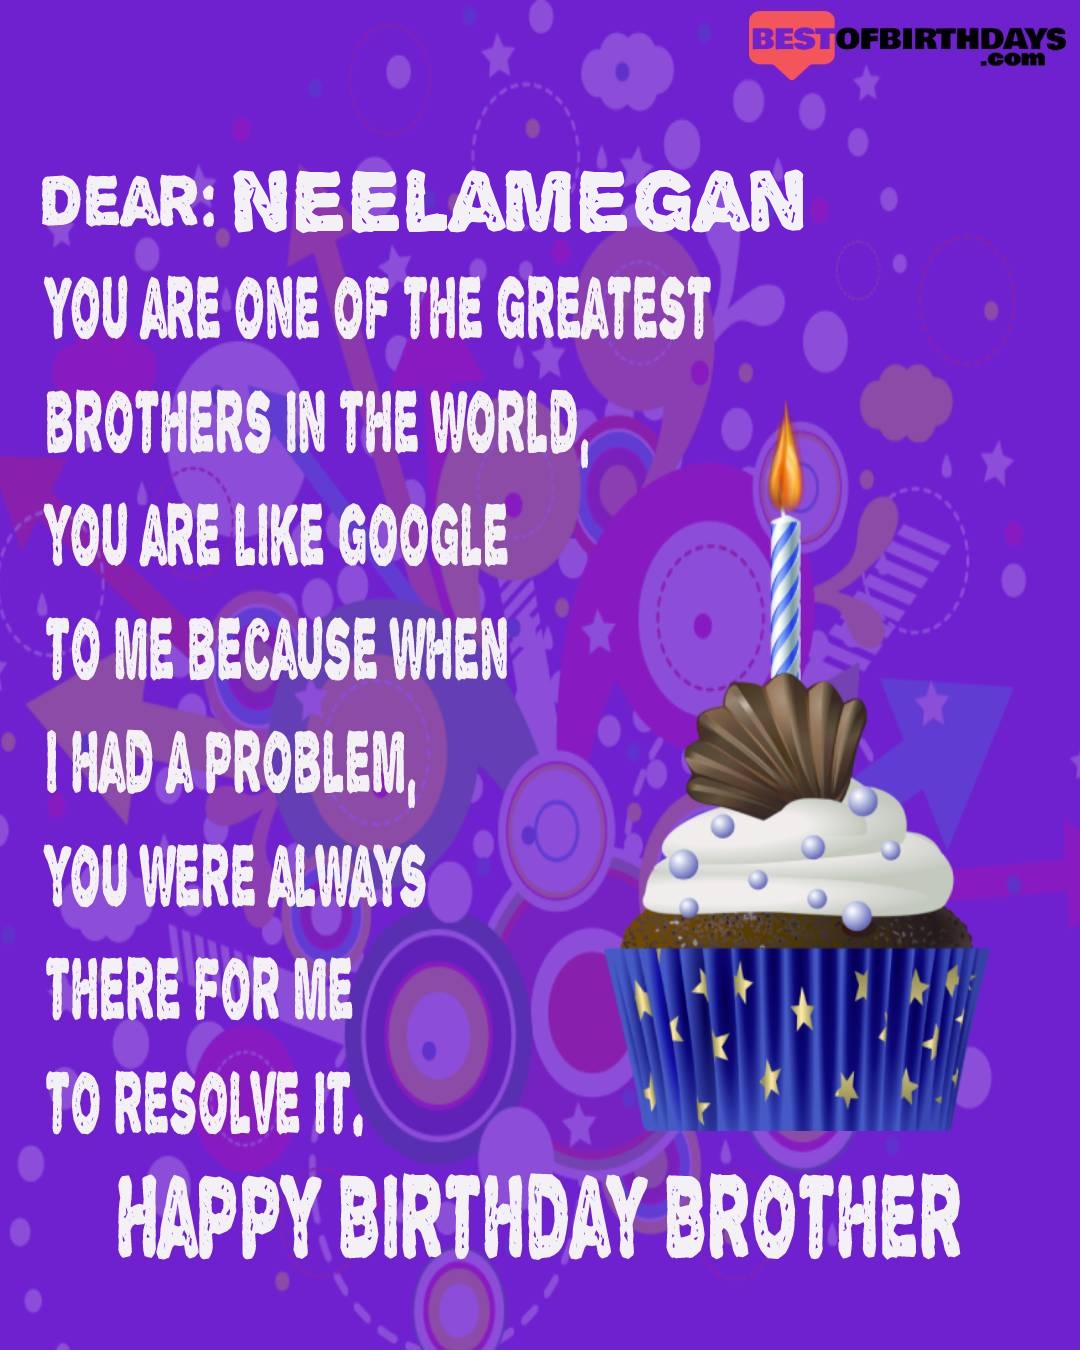 Happy birthday neelamegan bhai brother bro